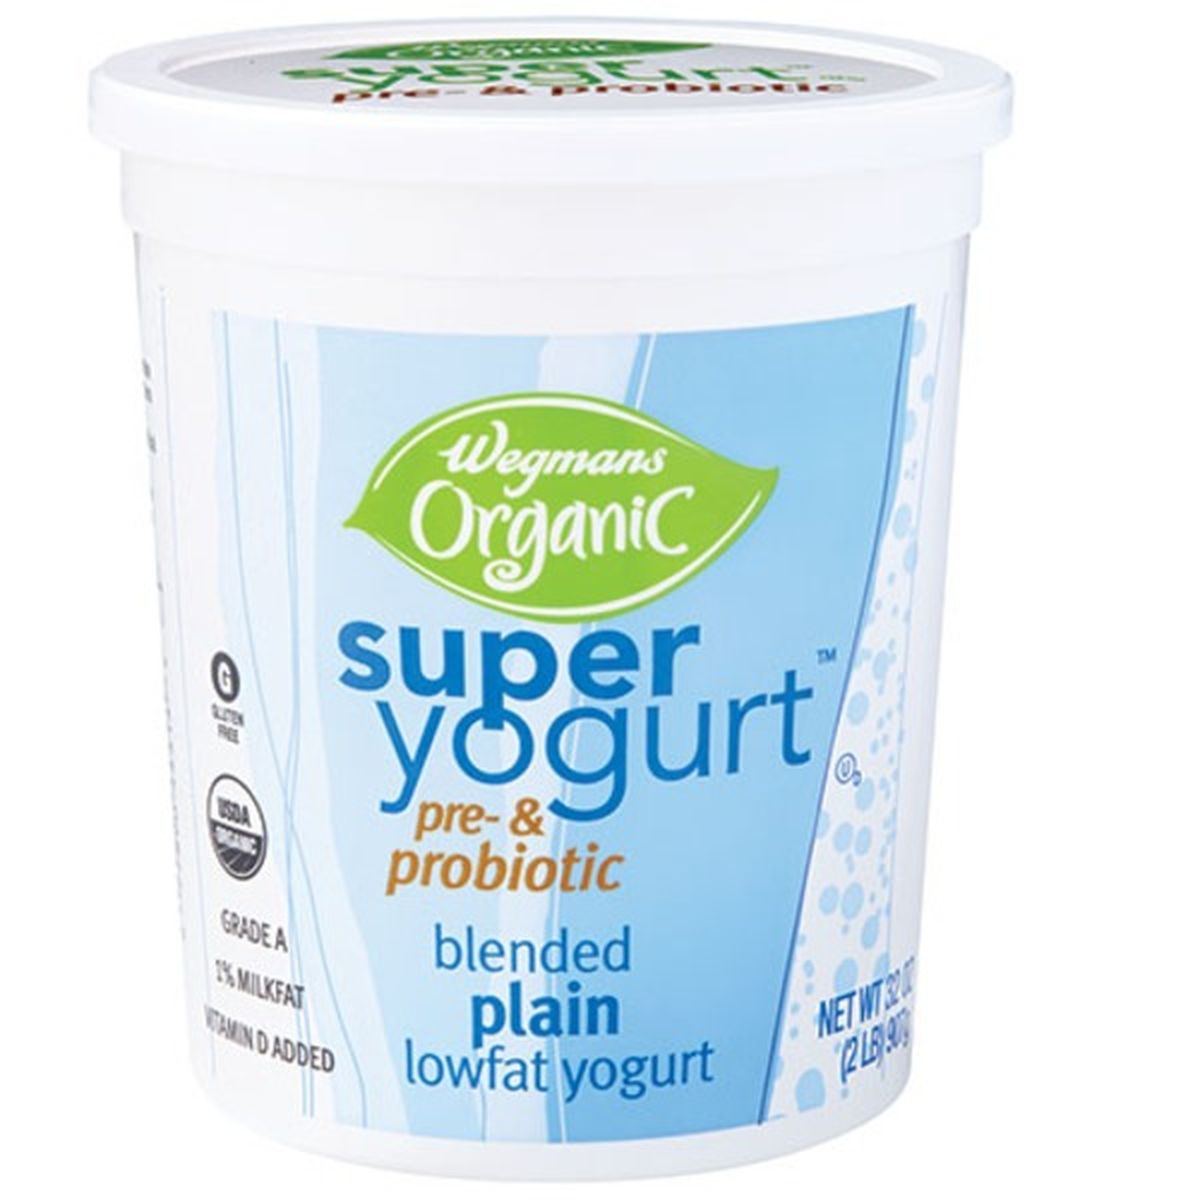 Calories in Wegmans Organic Super Yogurt Lowfat Plain Super Yogurt